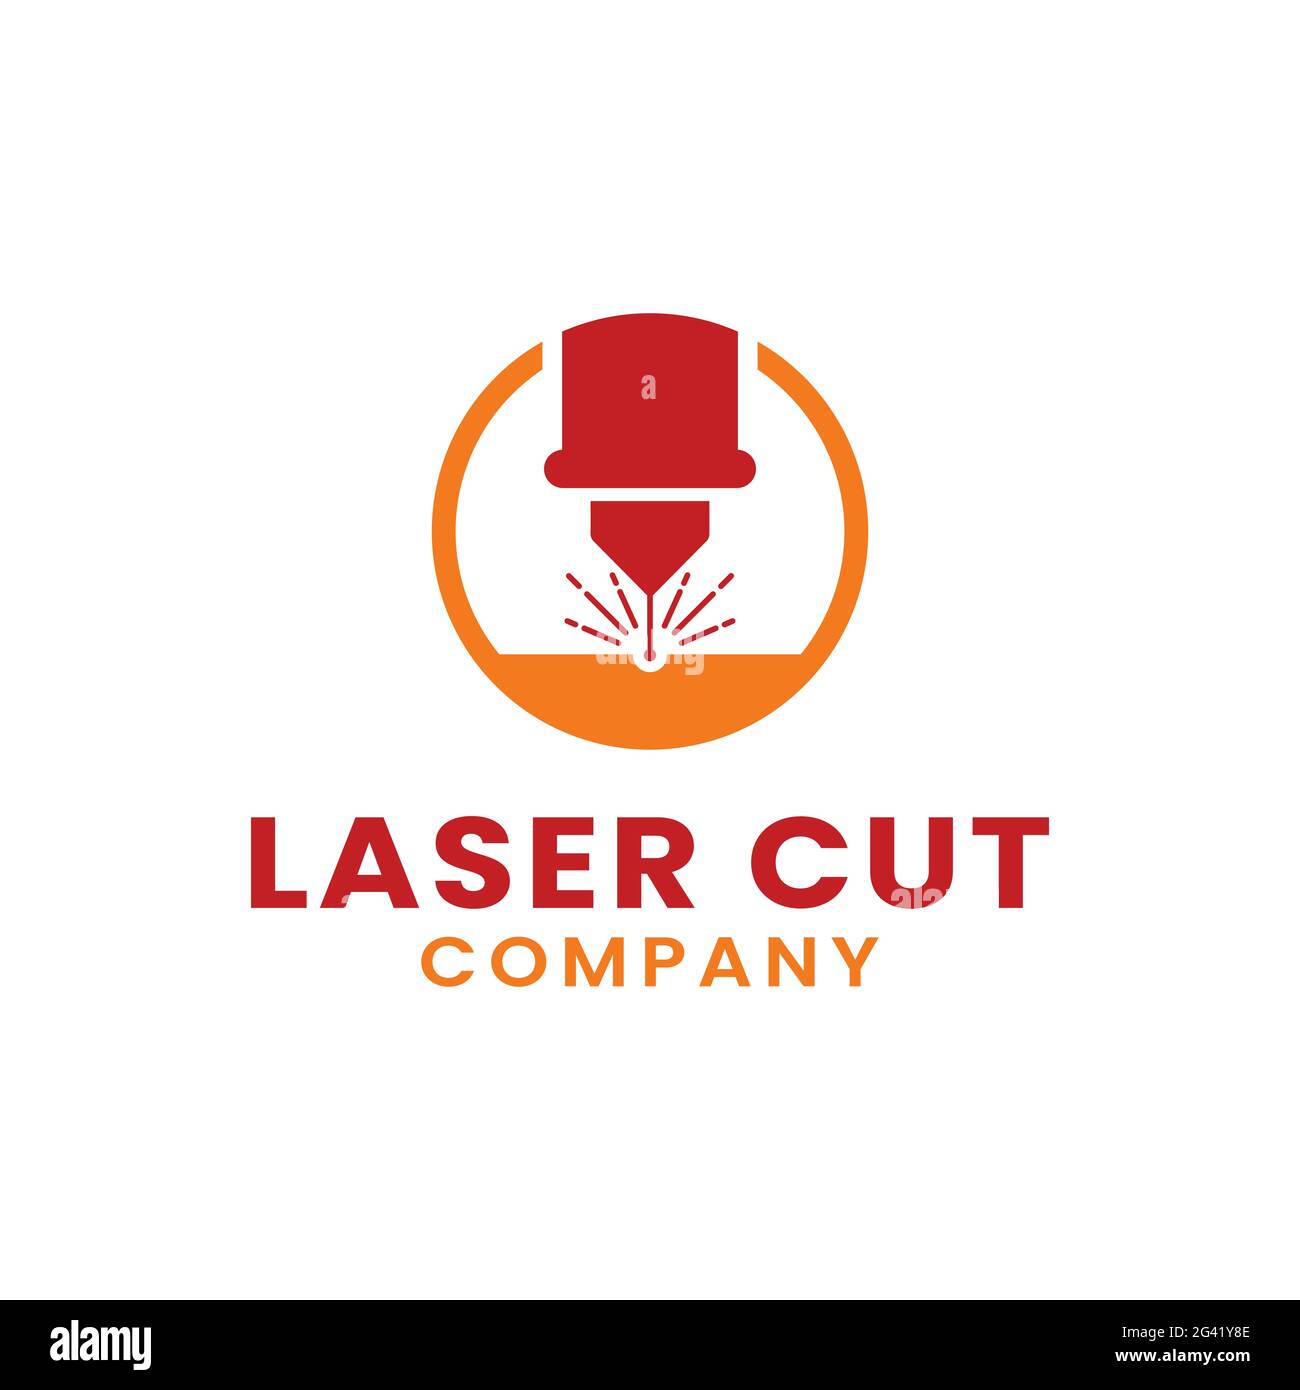 Laser Beam Plasma Machine Cutting Engraving Welding Melting Milling  Manufacturing Metalwork Workshop Industry Company Simple Flat Logo Design  Stock Vector Image & Art - Alamy